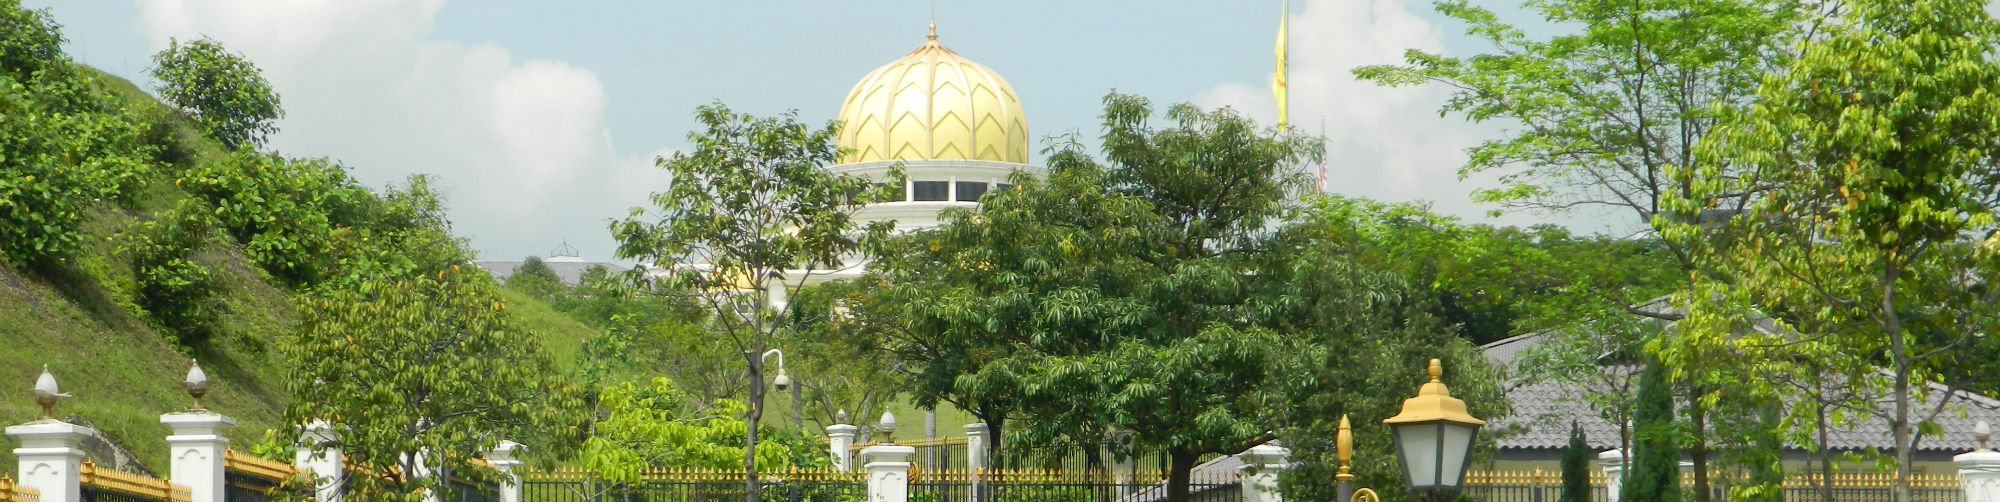 Royal King's Palace (Istana Negara), Kuala Lumpur, Malaysia